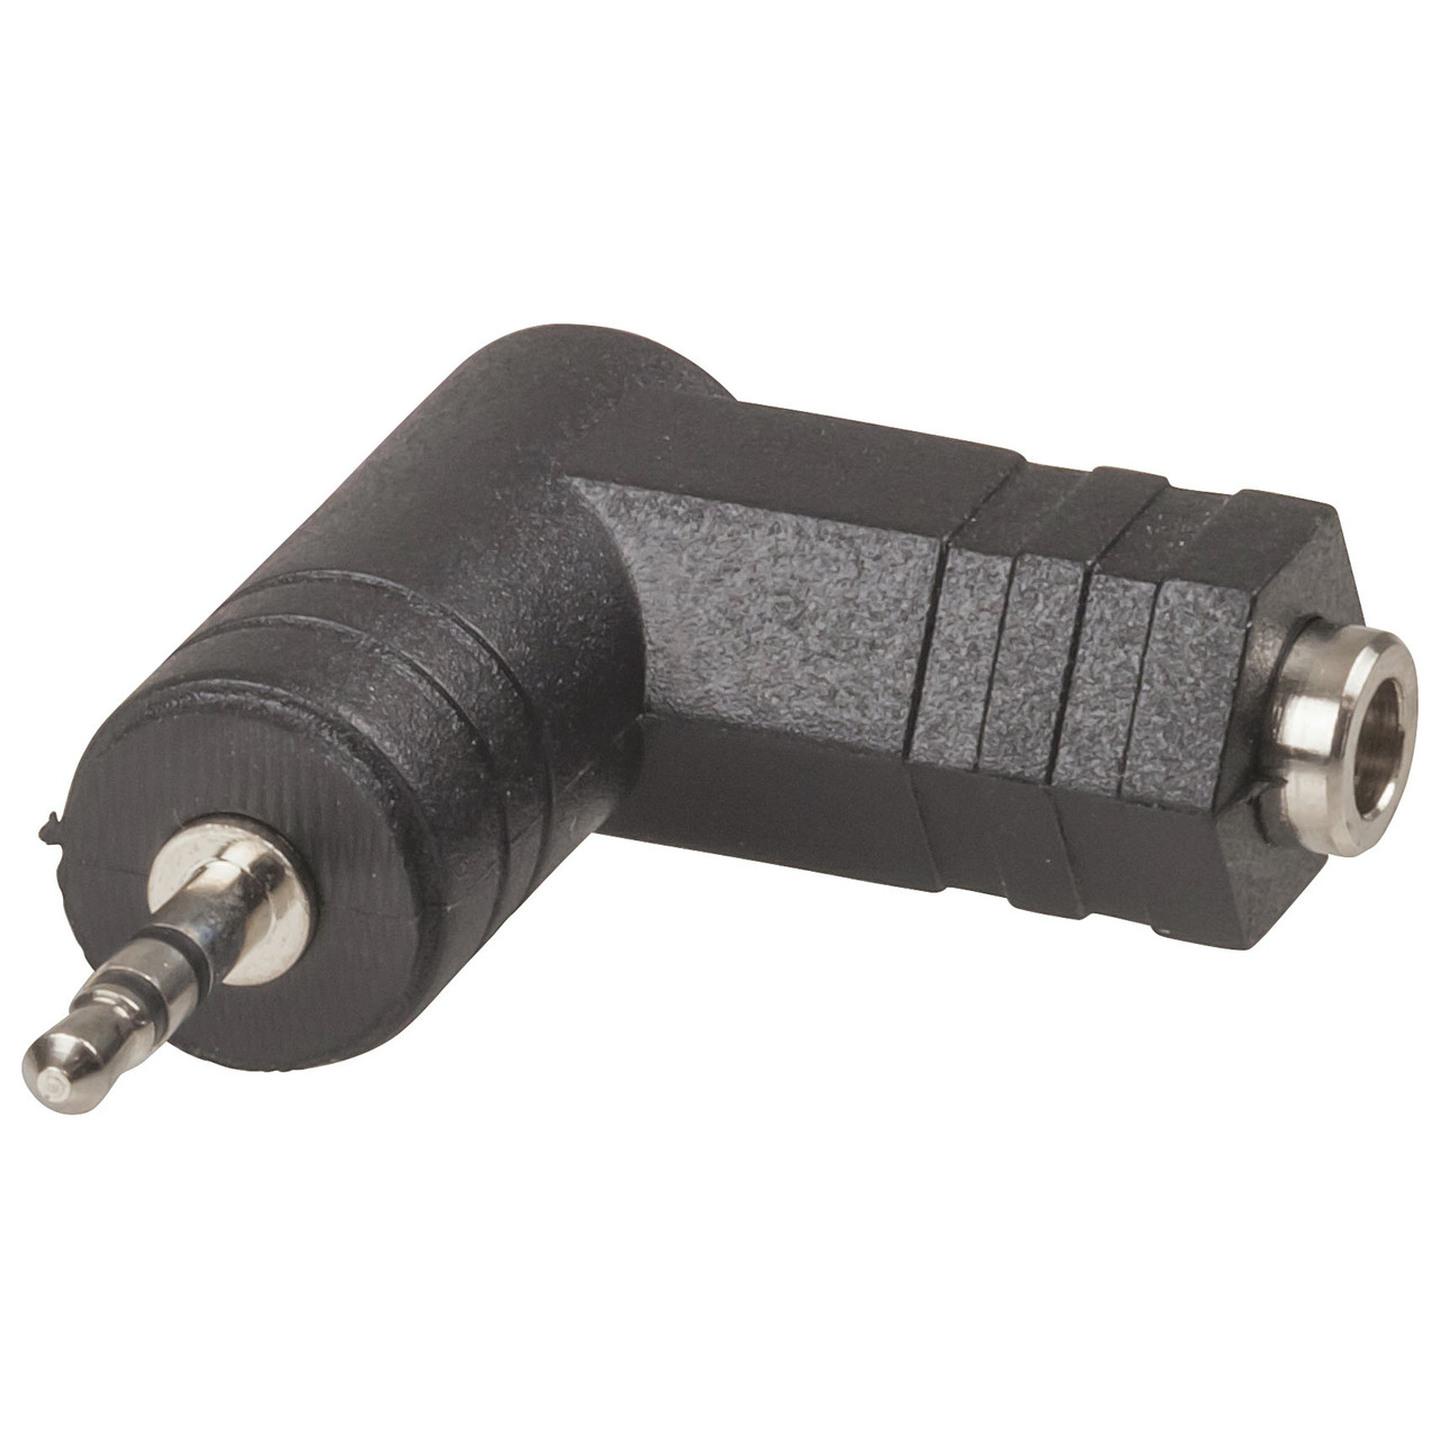 Adaptor 3.5mm Socket - 2.5mm Stereo Plug Right Angle